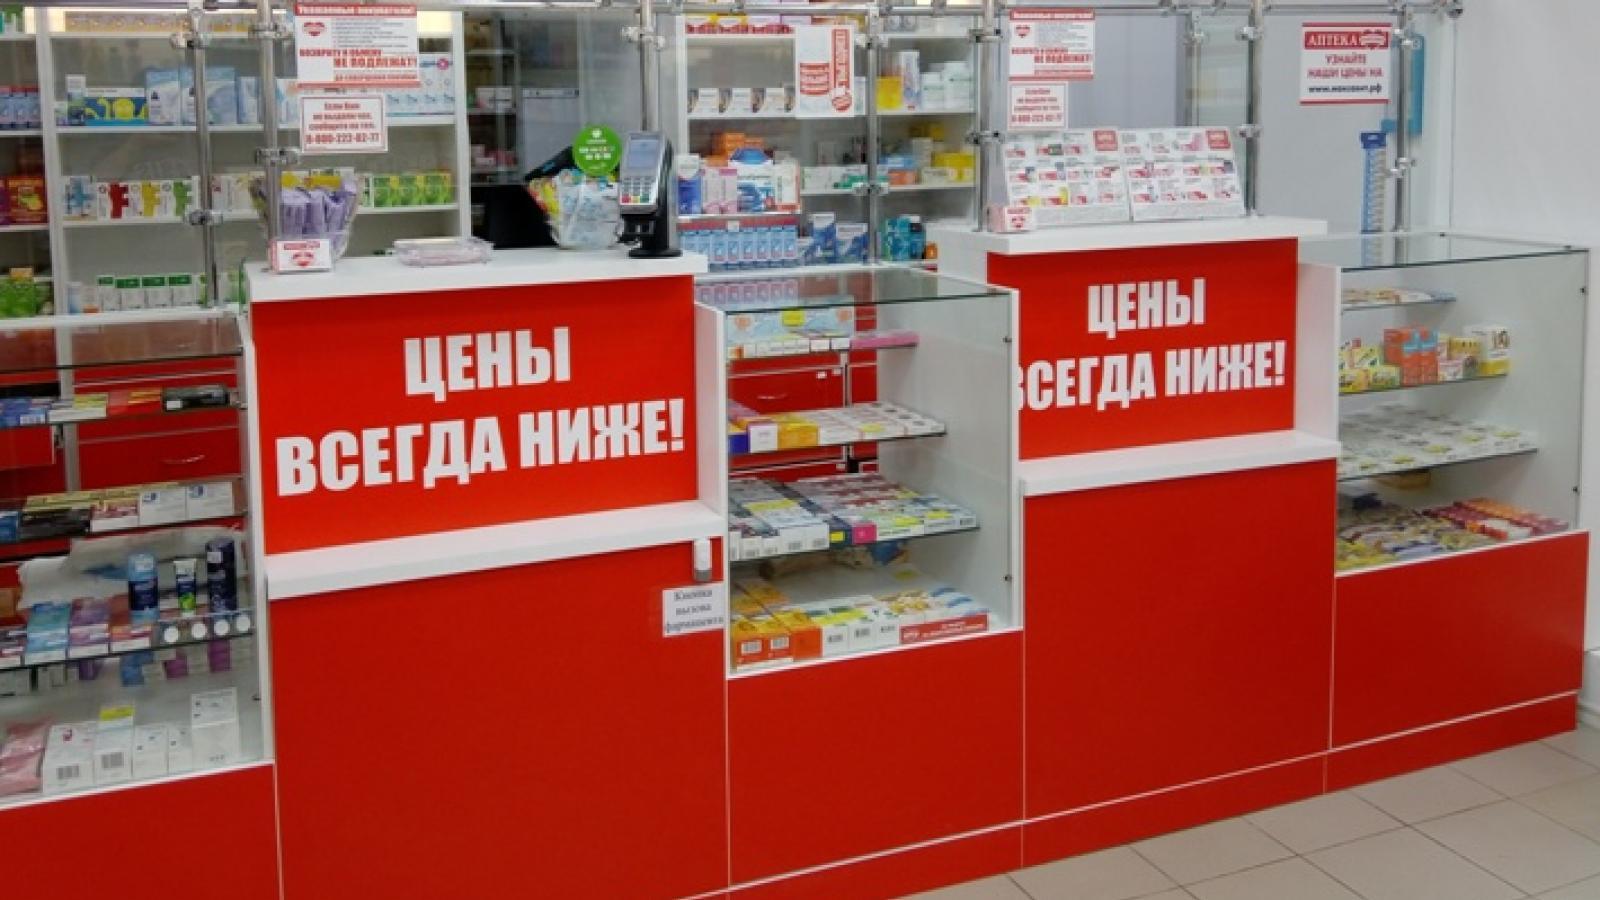 Аптека Максавит Чебоксары Цены На Лекарства